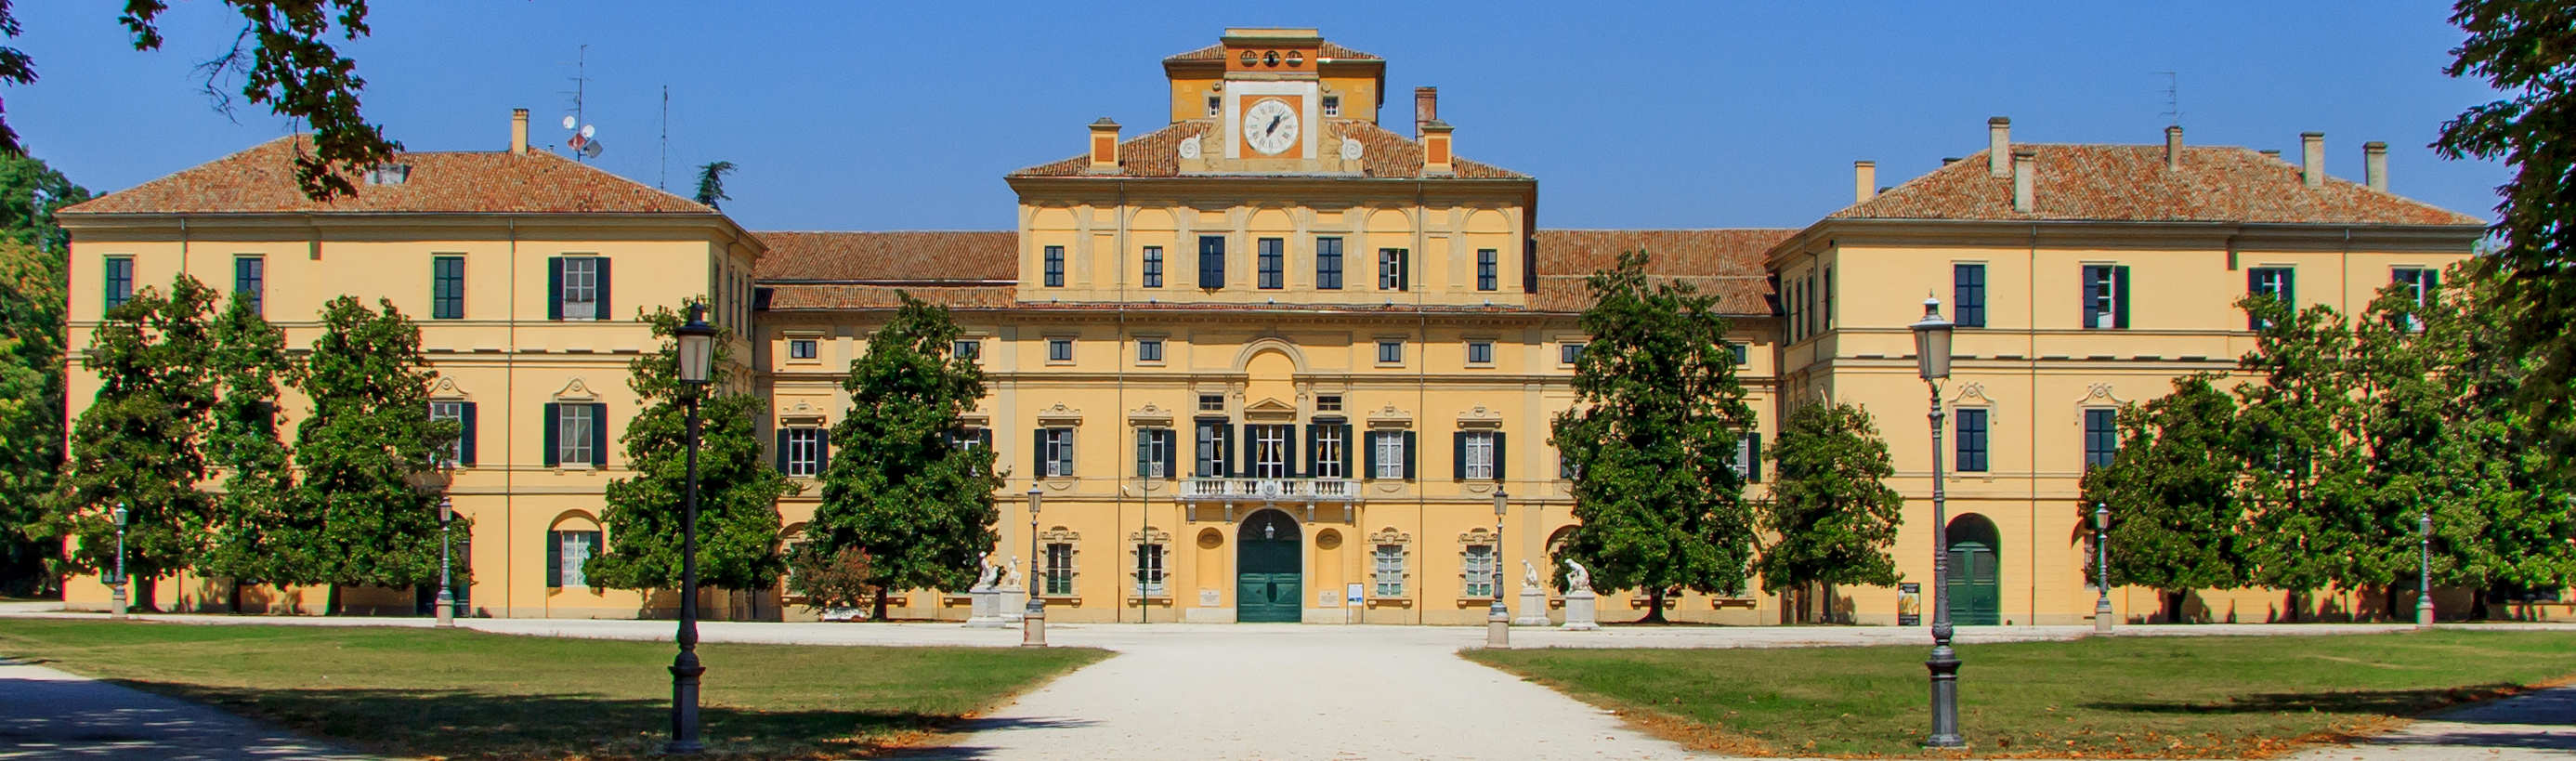 foto: https://upload.wikimedia.org/wikipedia/commons/7/72/Palazzo_Ducale_PARMA.jpg